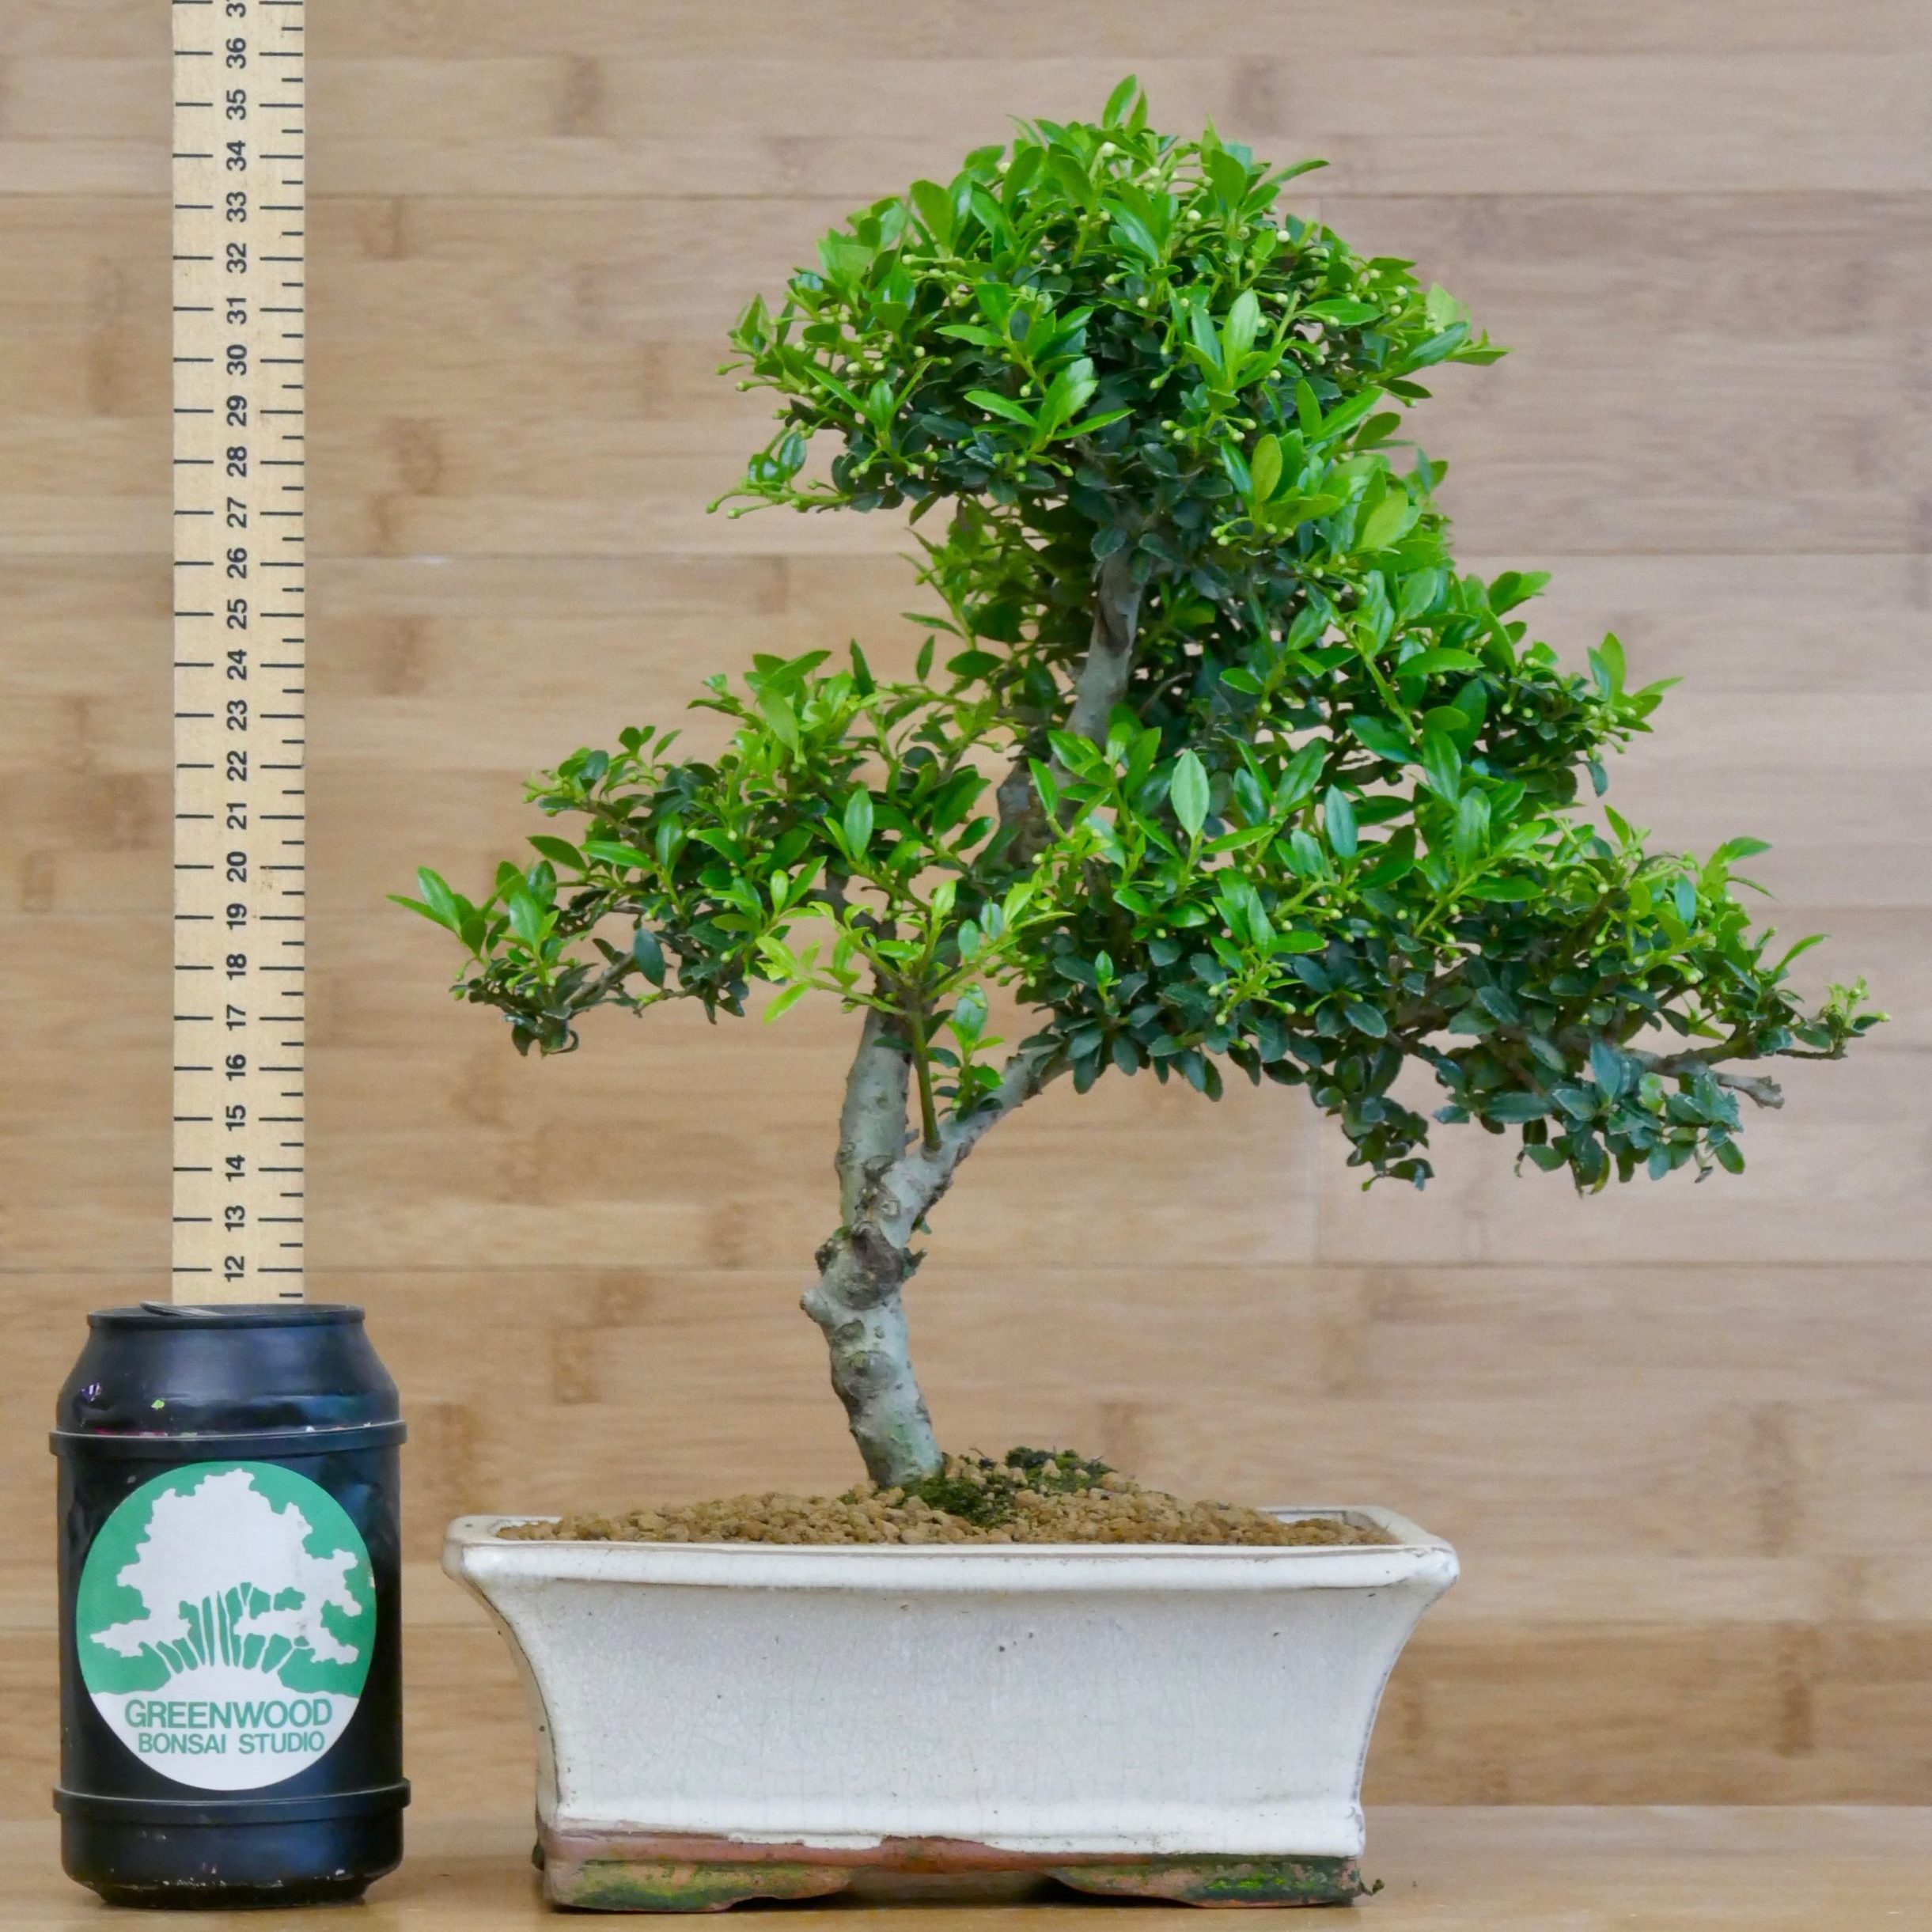 Steen Onrecht cement Chinese Holly Bonsai (Ilex) - Indoor Bonsai Tree in Glazed Pot - Greenwood  Bonsai Studio